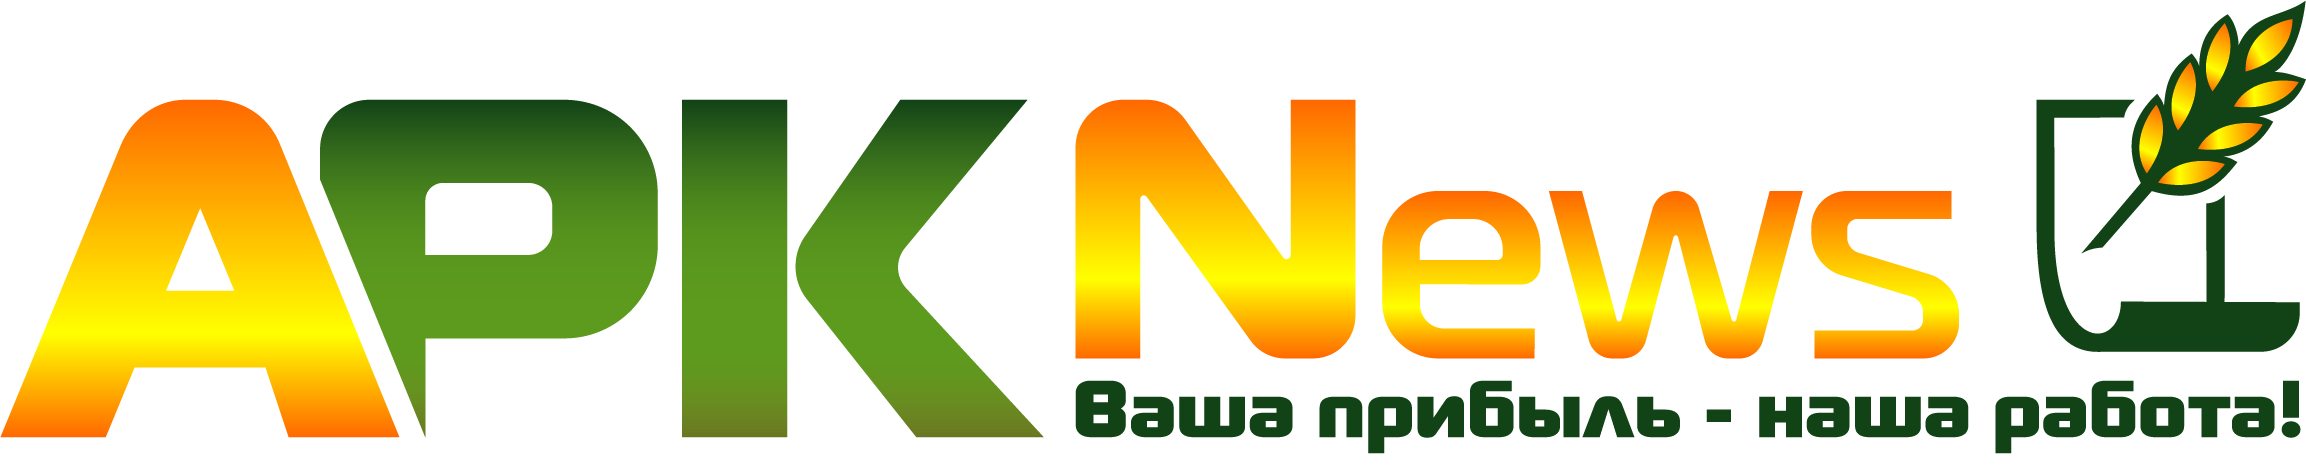 Апк ньюс. APK News логотип. Логотип журнала Orange Technology. Агропромкрым логотип. Веазел Невс лого.